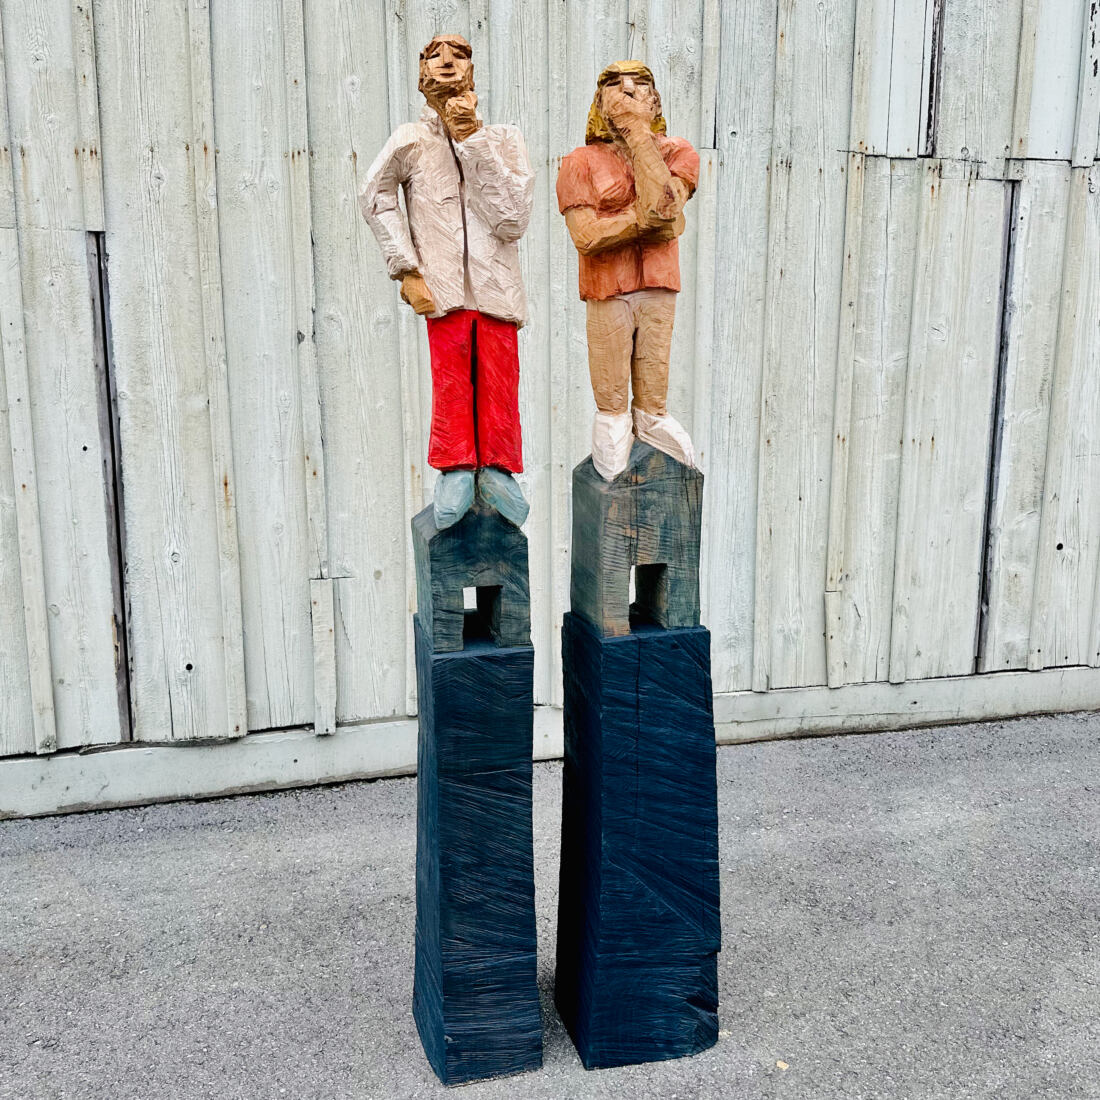 Marcel Bernet holzbildhauer figürlich holzskulptur sculptor figurative wood art